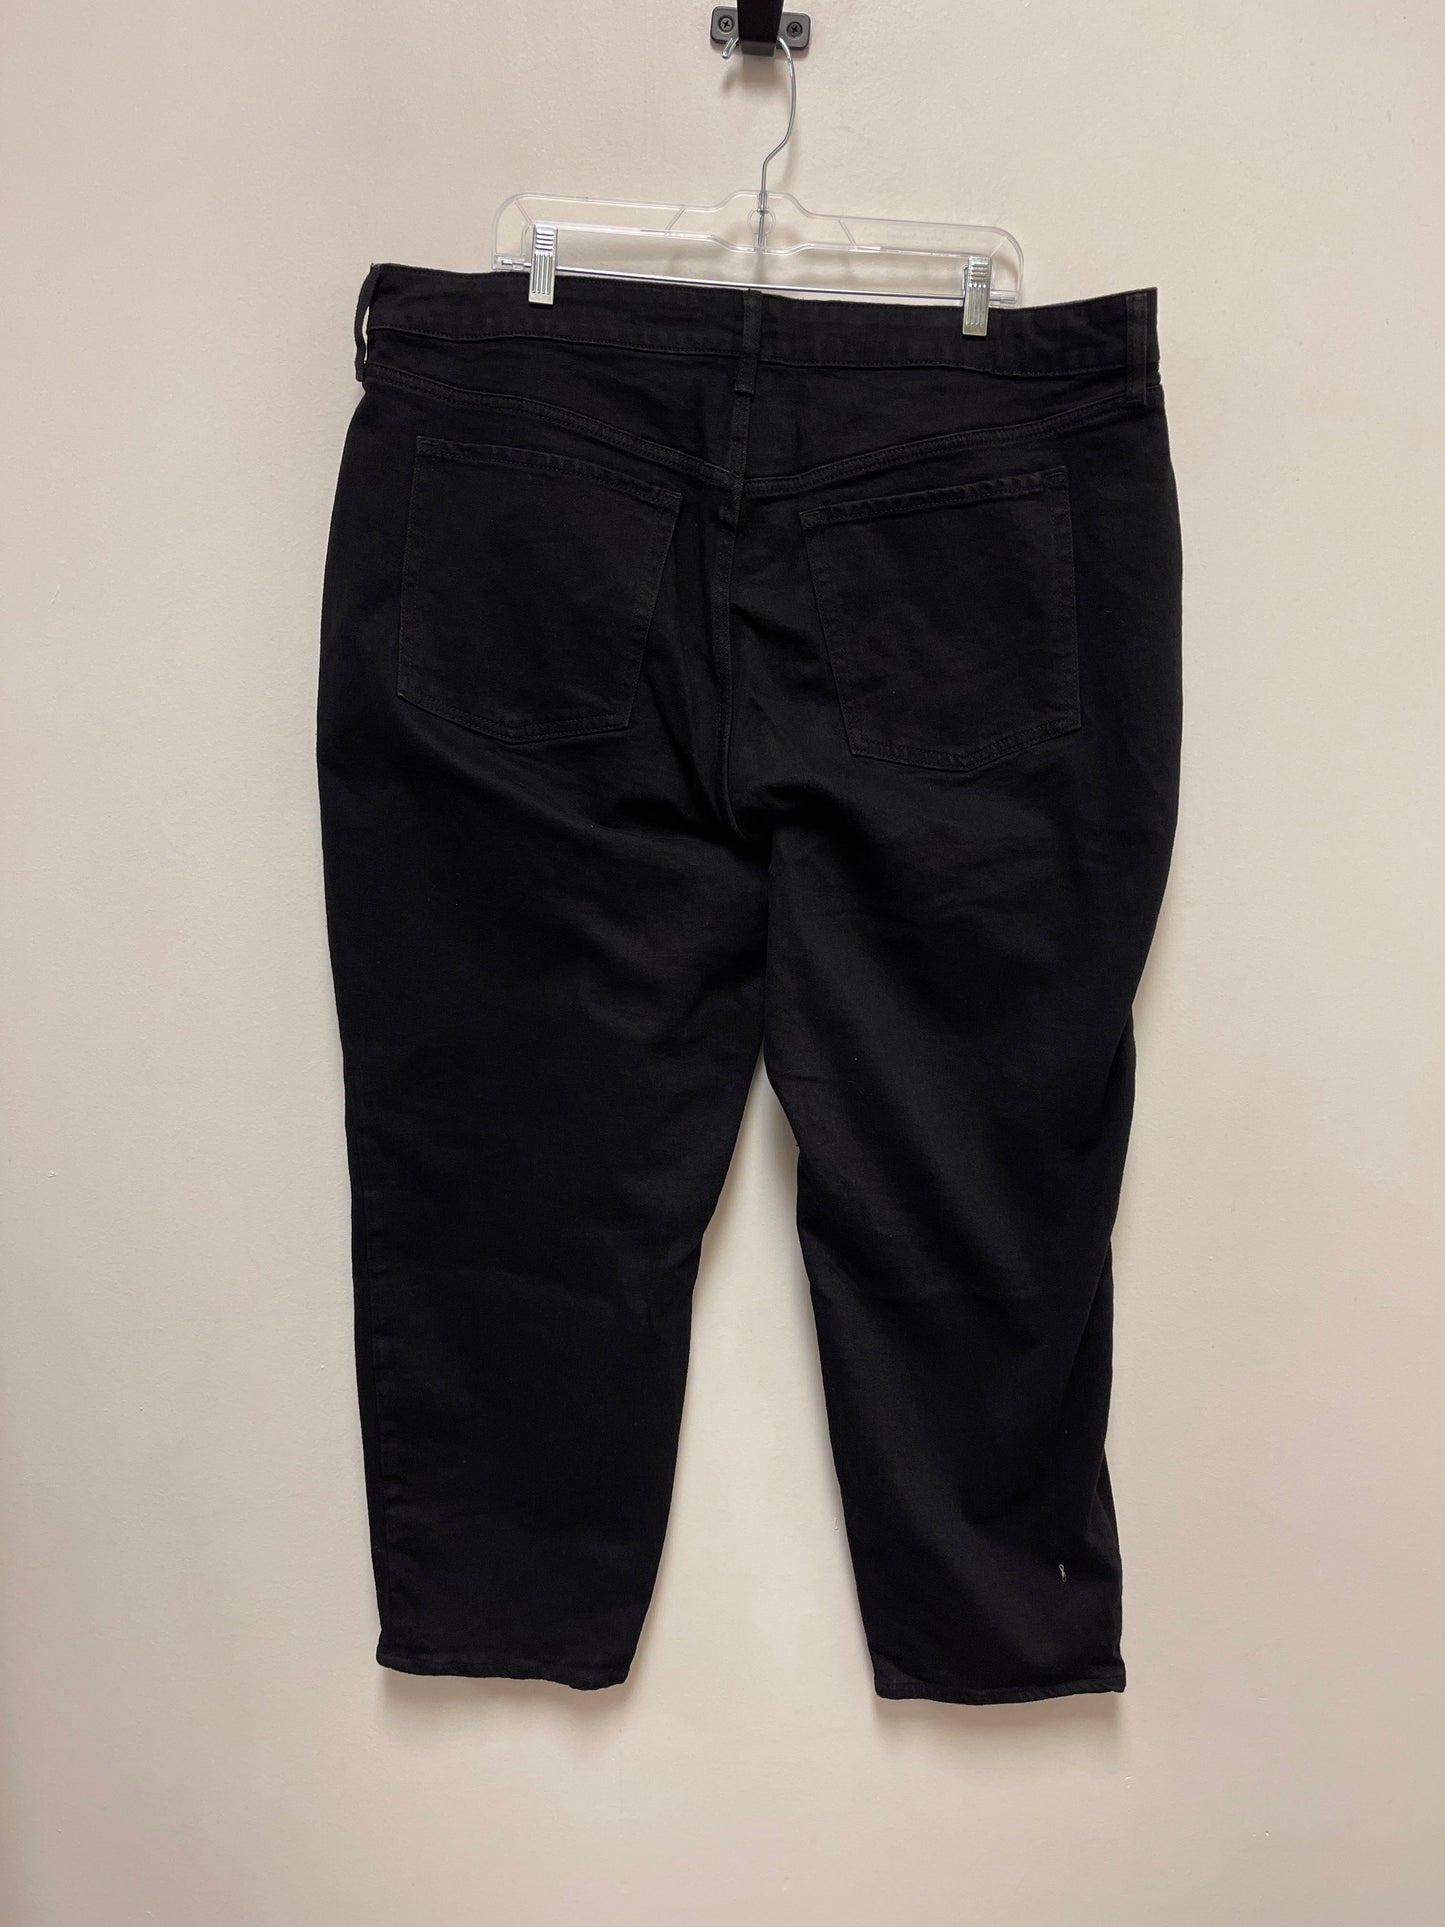 Black Denim Jeans Straight Old Navy, Size 3x